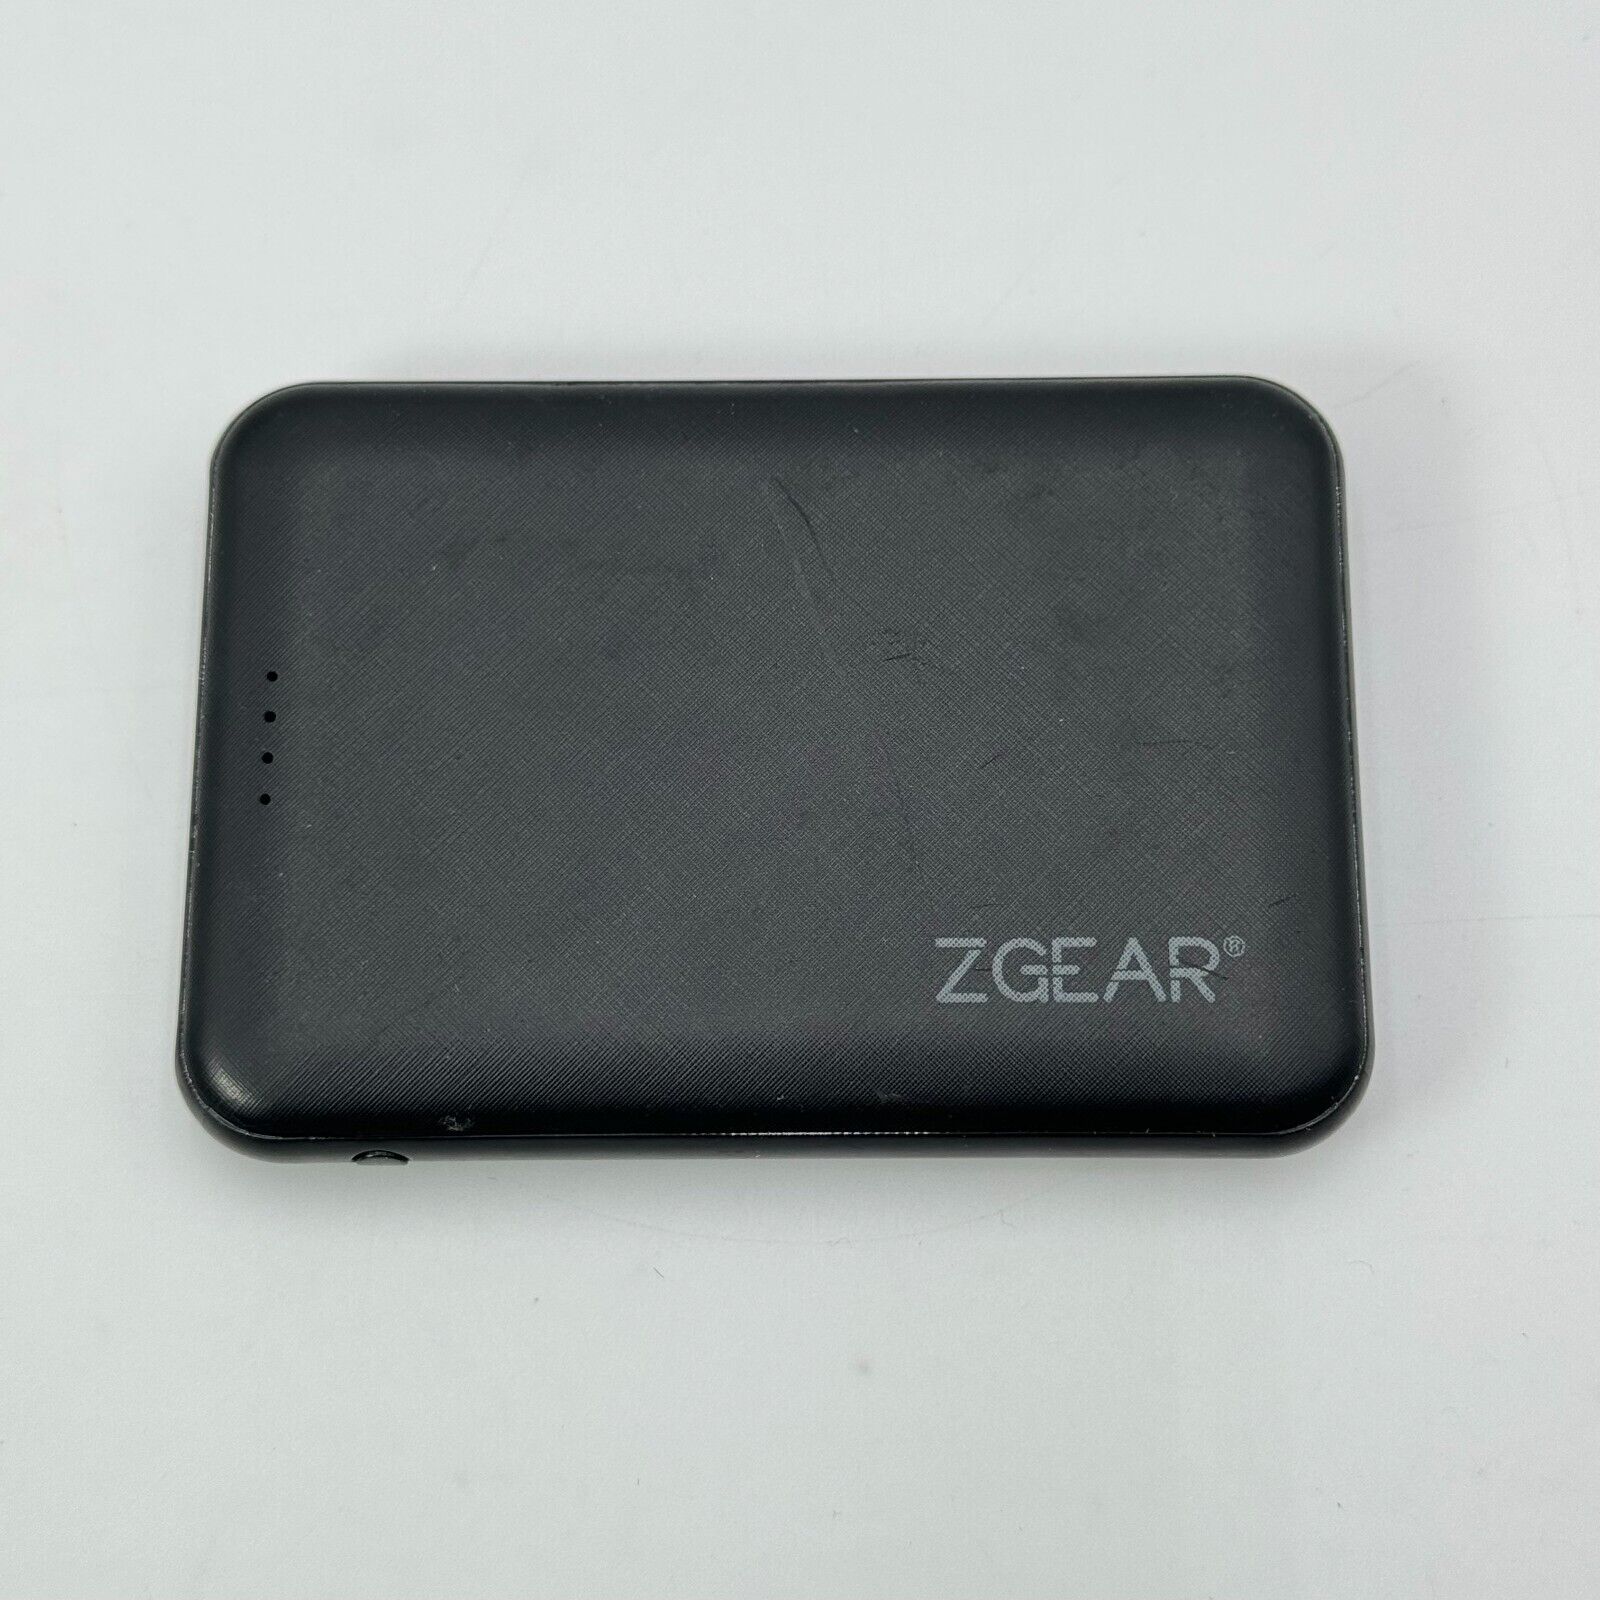 Zgear Slim Power Bank 5000 mAh with DUAL Charging Ports 10.5W